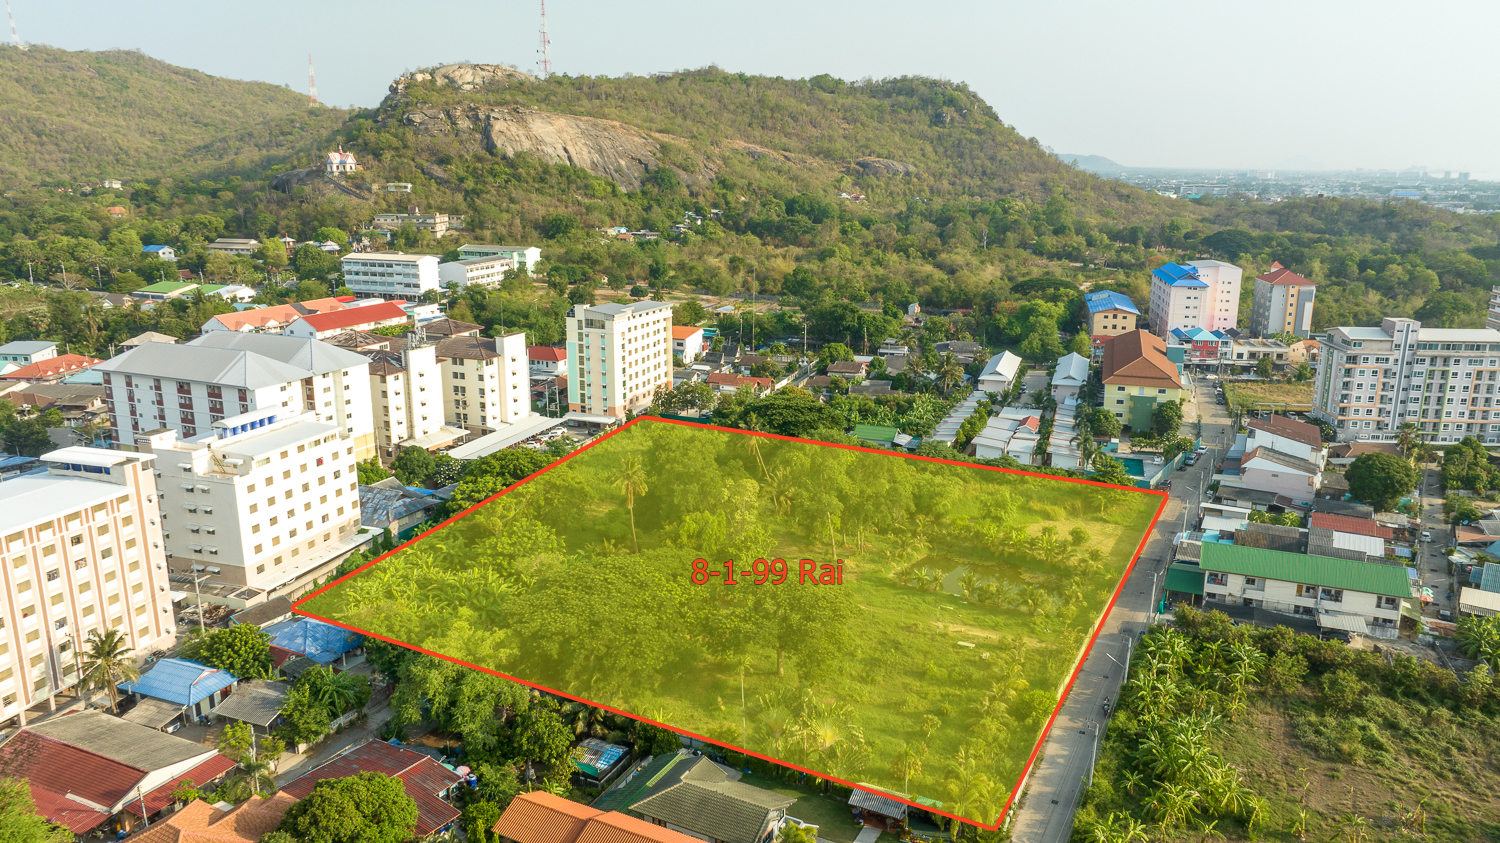 Huahin Land for sale, location Huahin town Soi 88, Land area 13596 sqm (8 Rai-1Ngan-99 sqwah), price 190 Million Baht